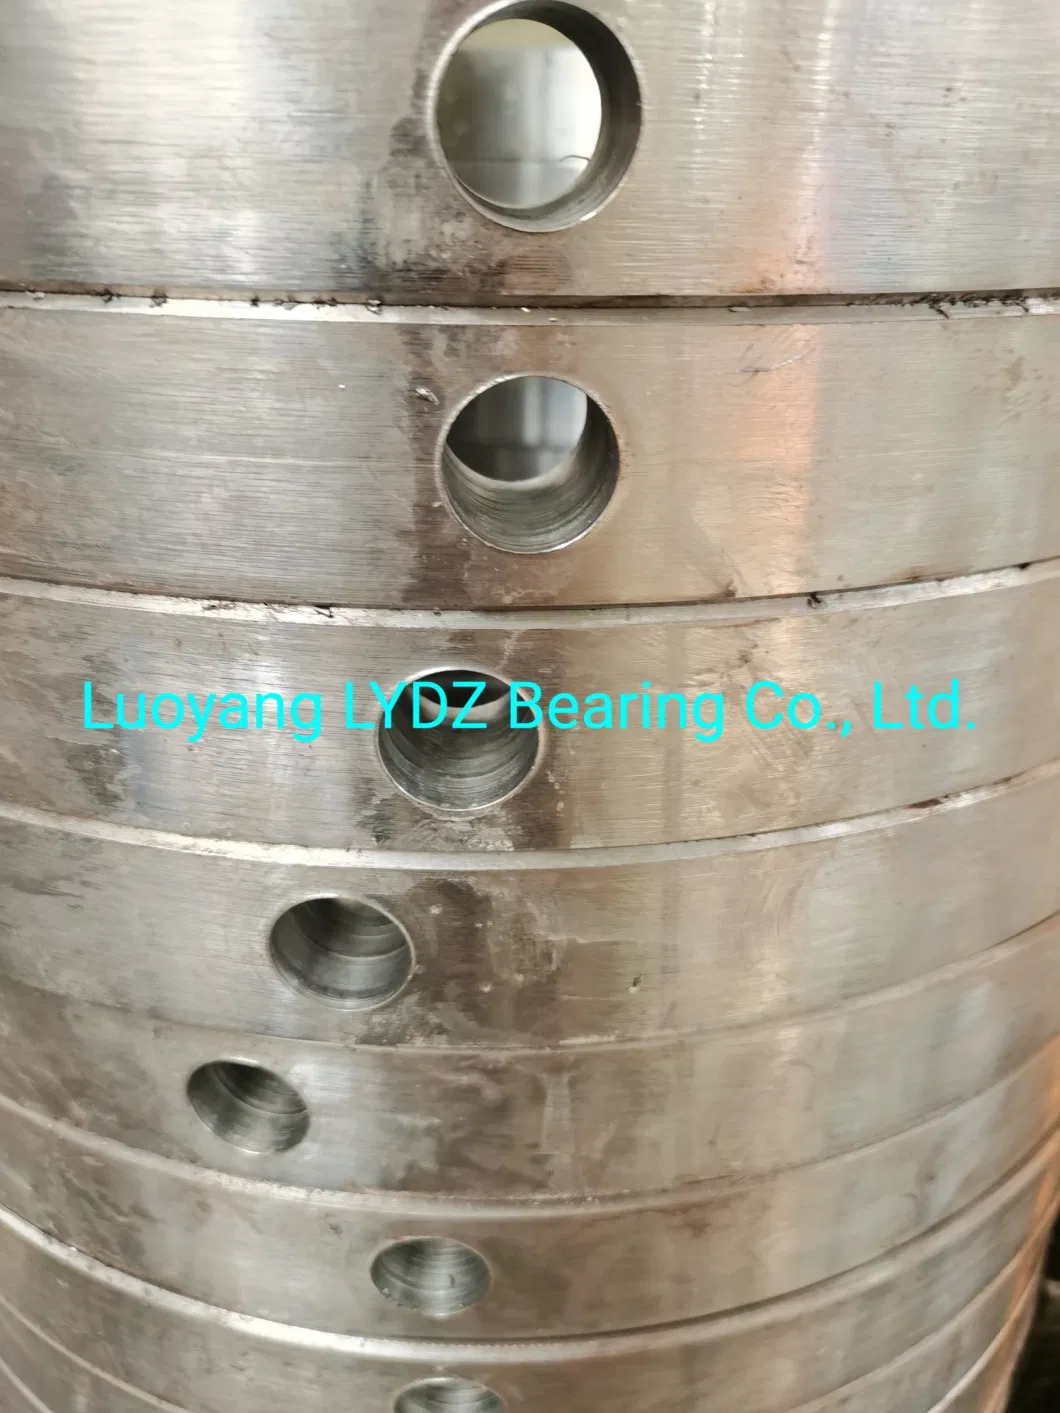 Rotating Platform of Mechanical Equipment Type 011.40.1000 Ball Bearing